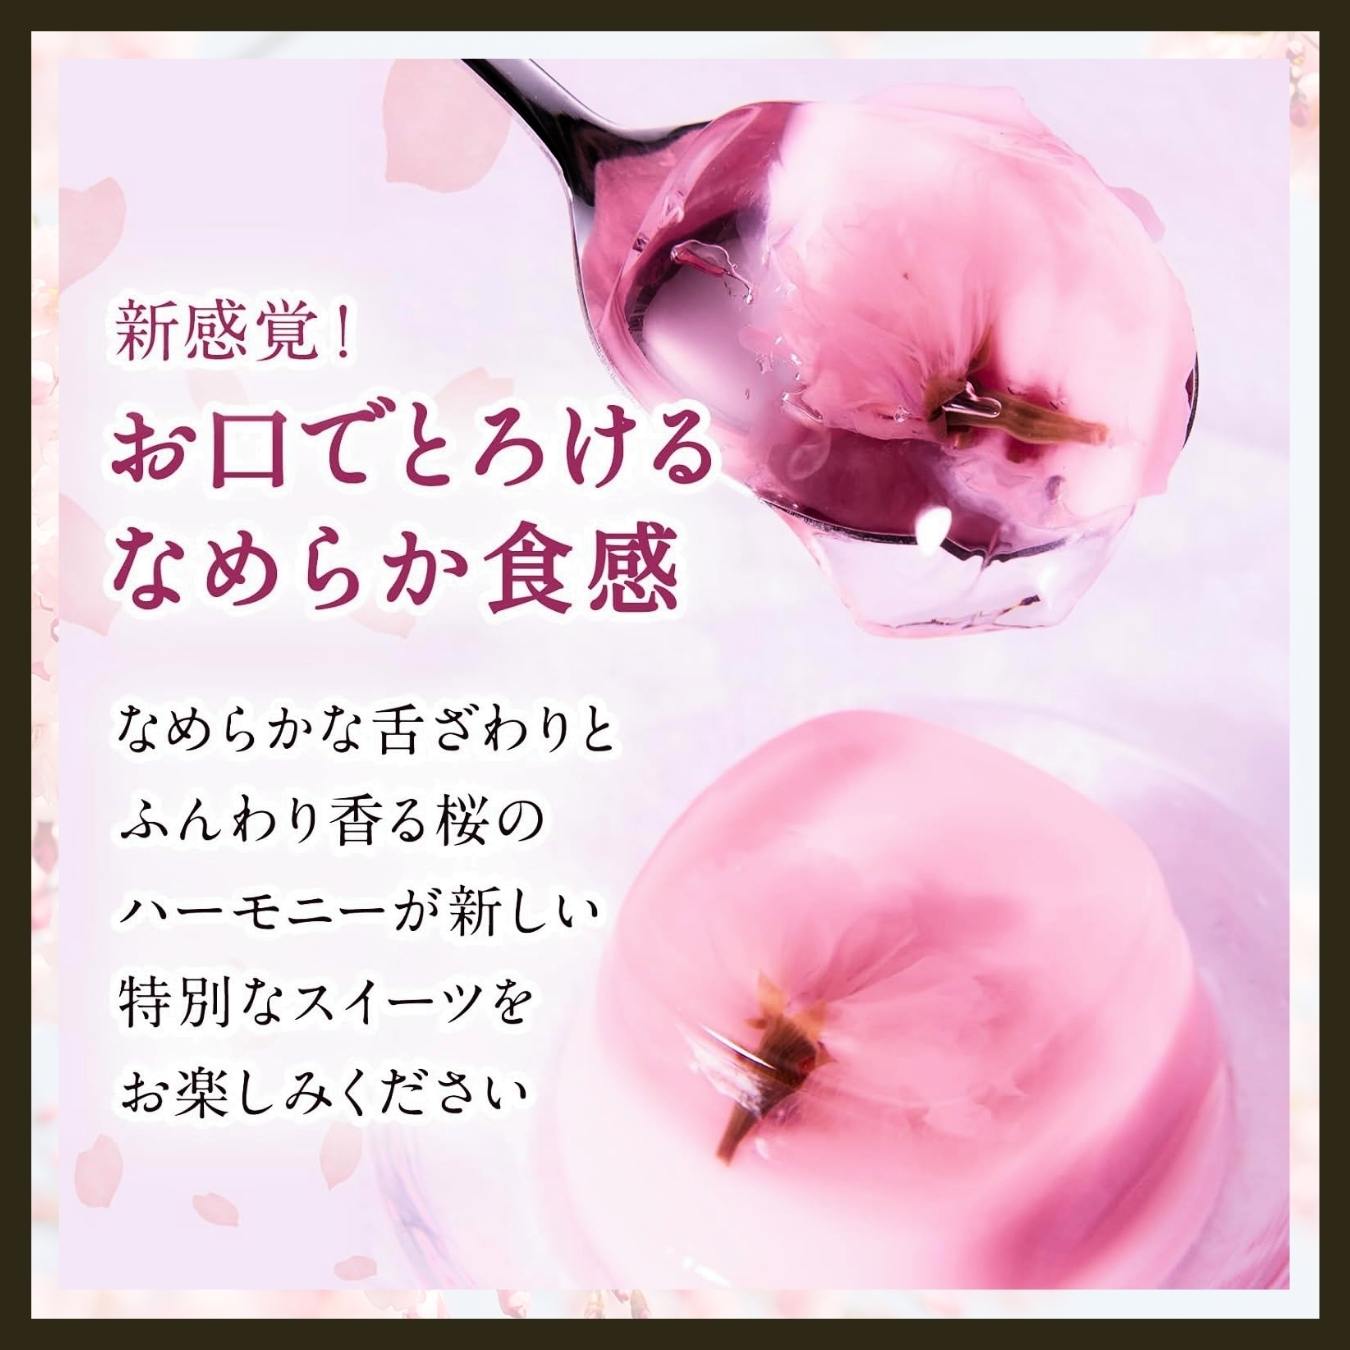 Delicate Seasonal Sakura Cherry Blossom x Peach Pudding - Creative Japanese Sweets - JapanHapiness